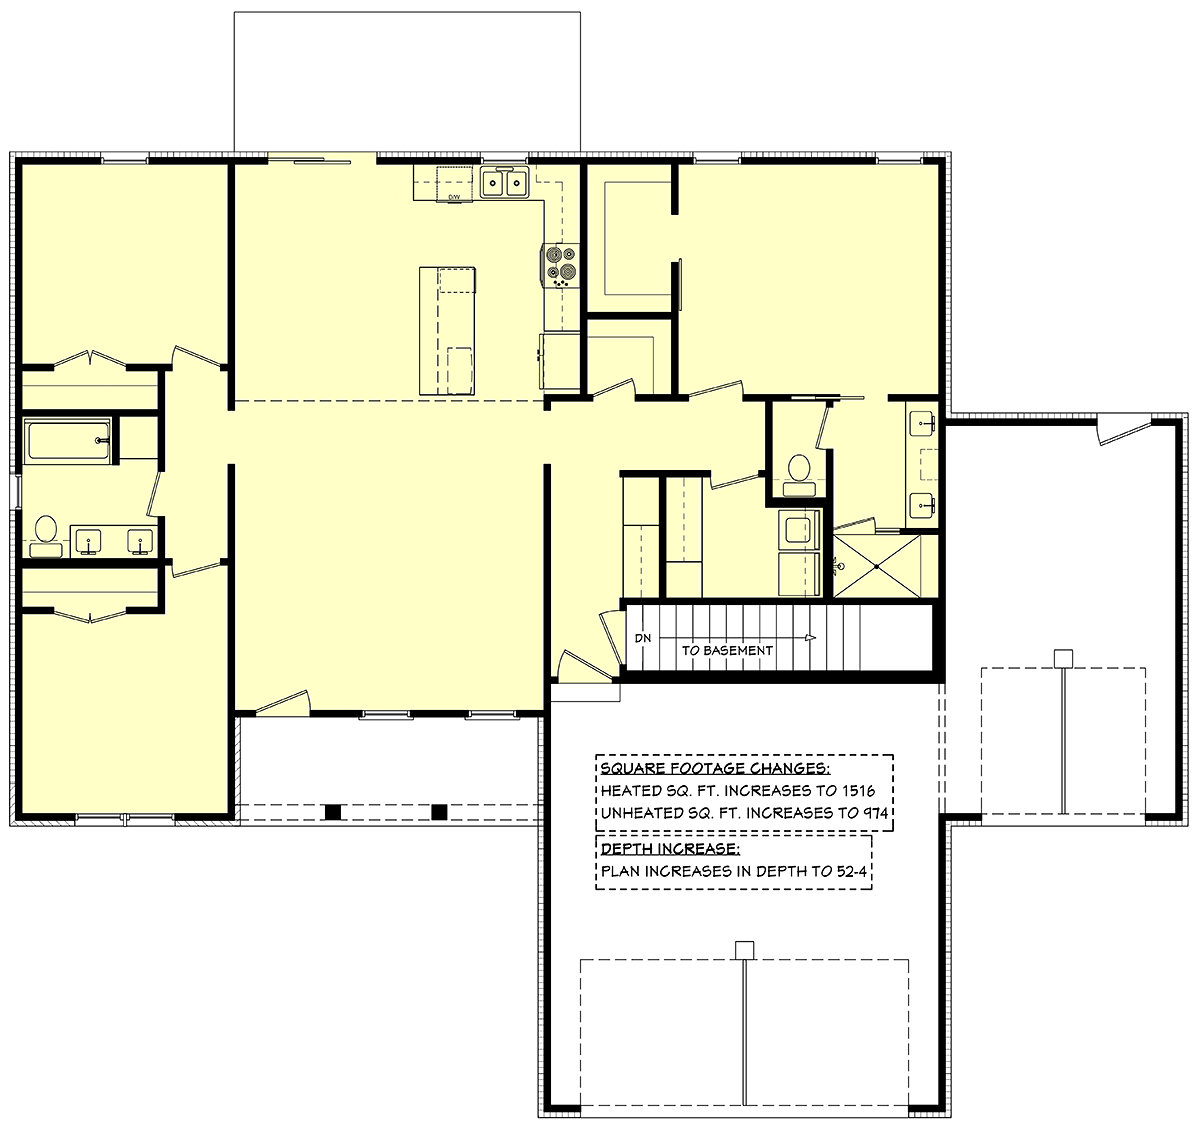 House Plan 80869 Alternate Level One